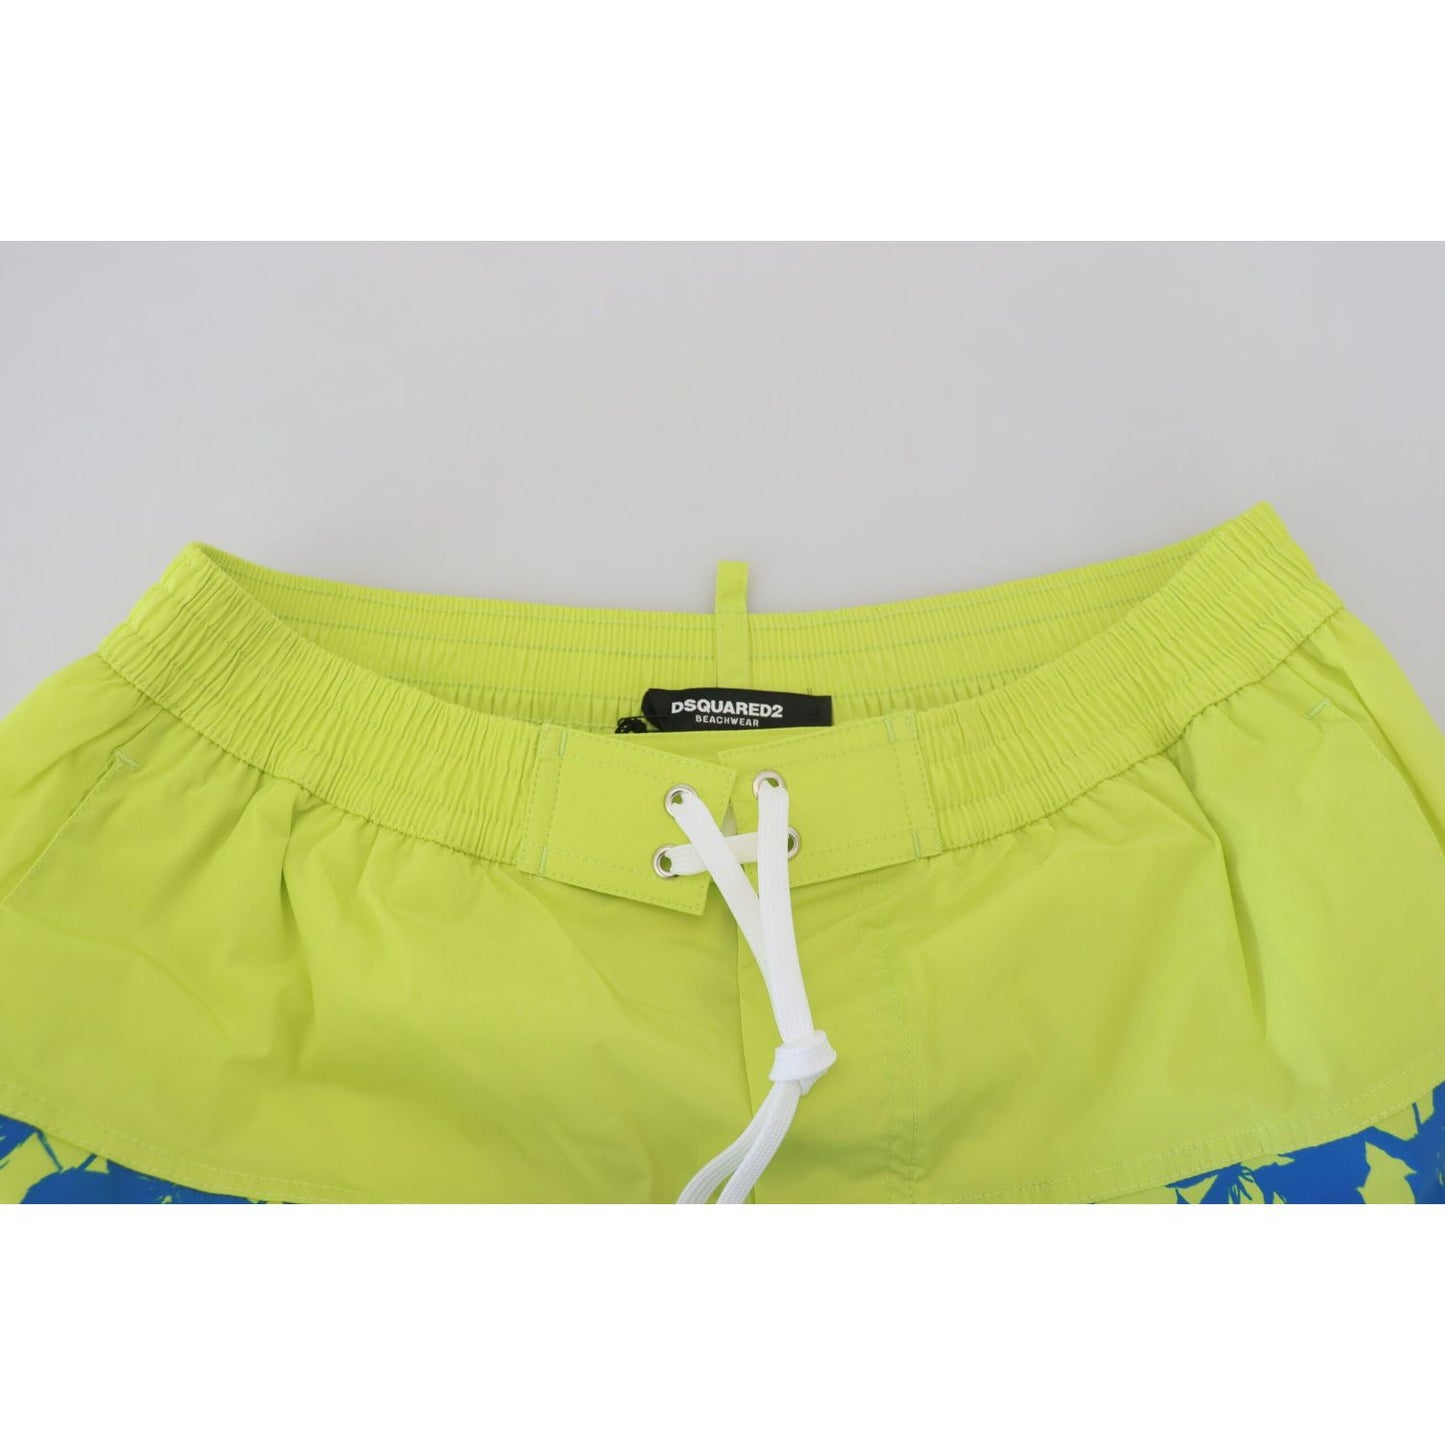 Dsquared² Exquisite Blue Green Swim Shorts Boxer blue-green-logo-print-men-beachwear-shorts-swimwear IMG_6008-scaled-f9d1e790-7f7.jpg